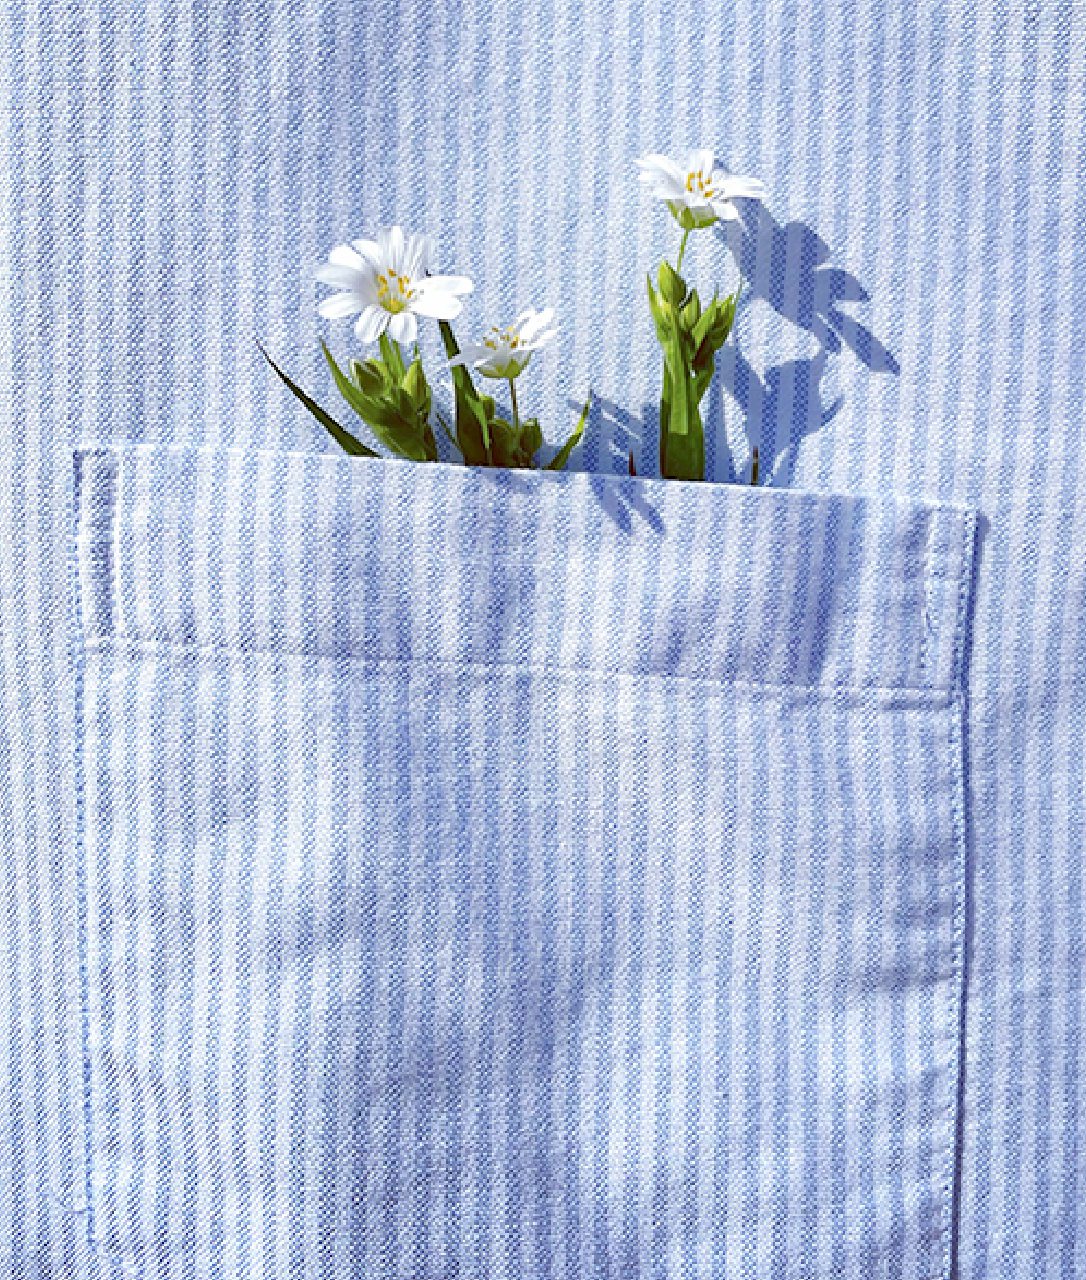 Flowers in a pocket